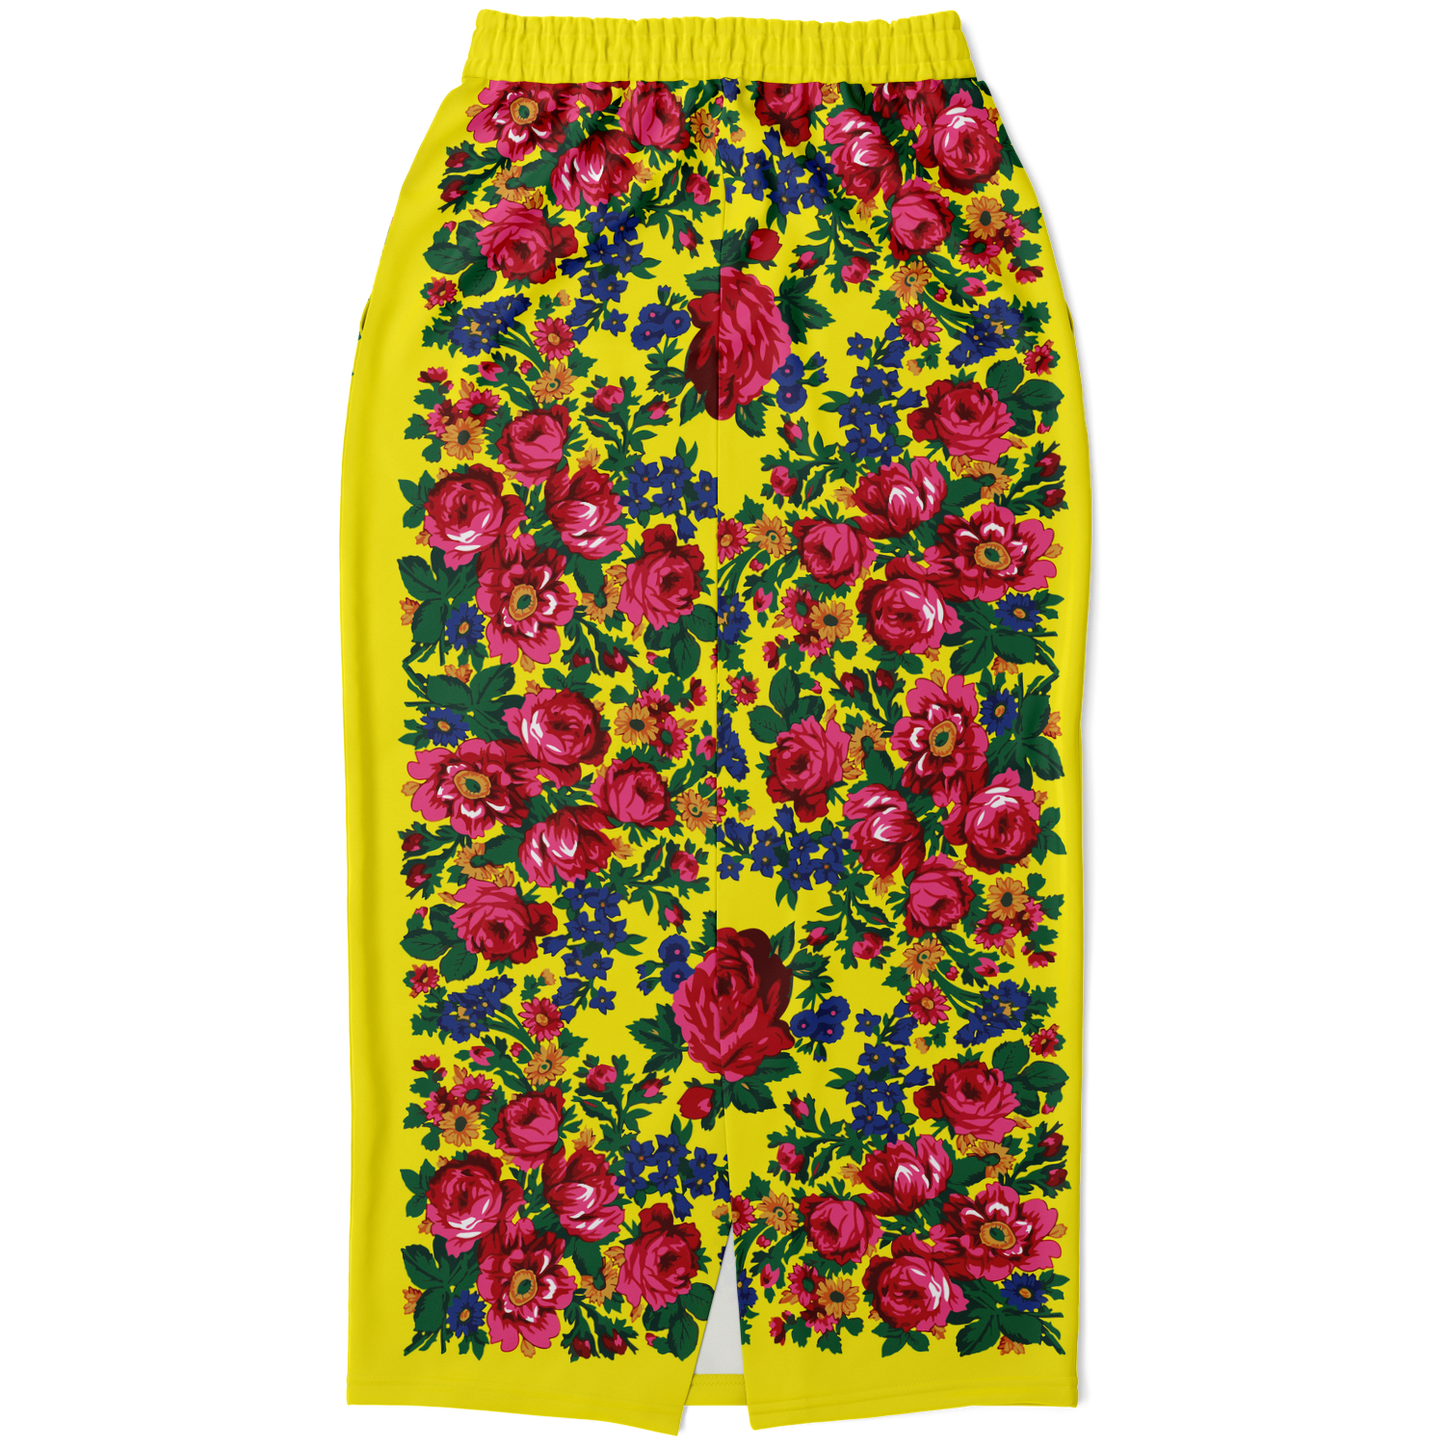 Kokum Floral (Yellow) - Athletic Midi Skirt